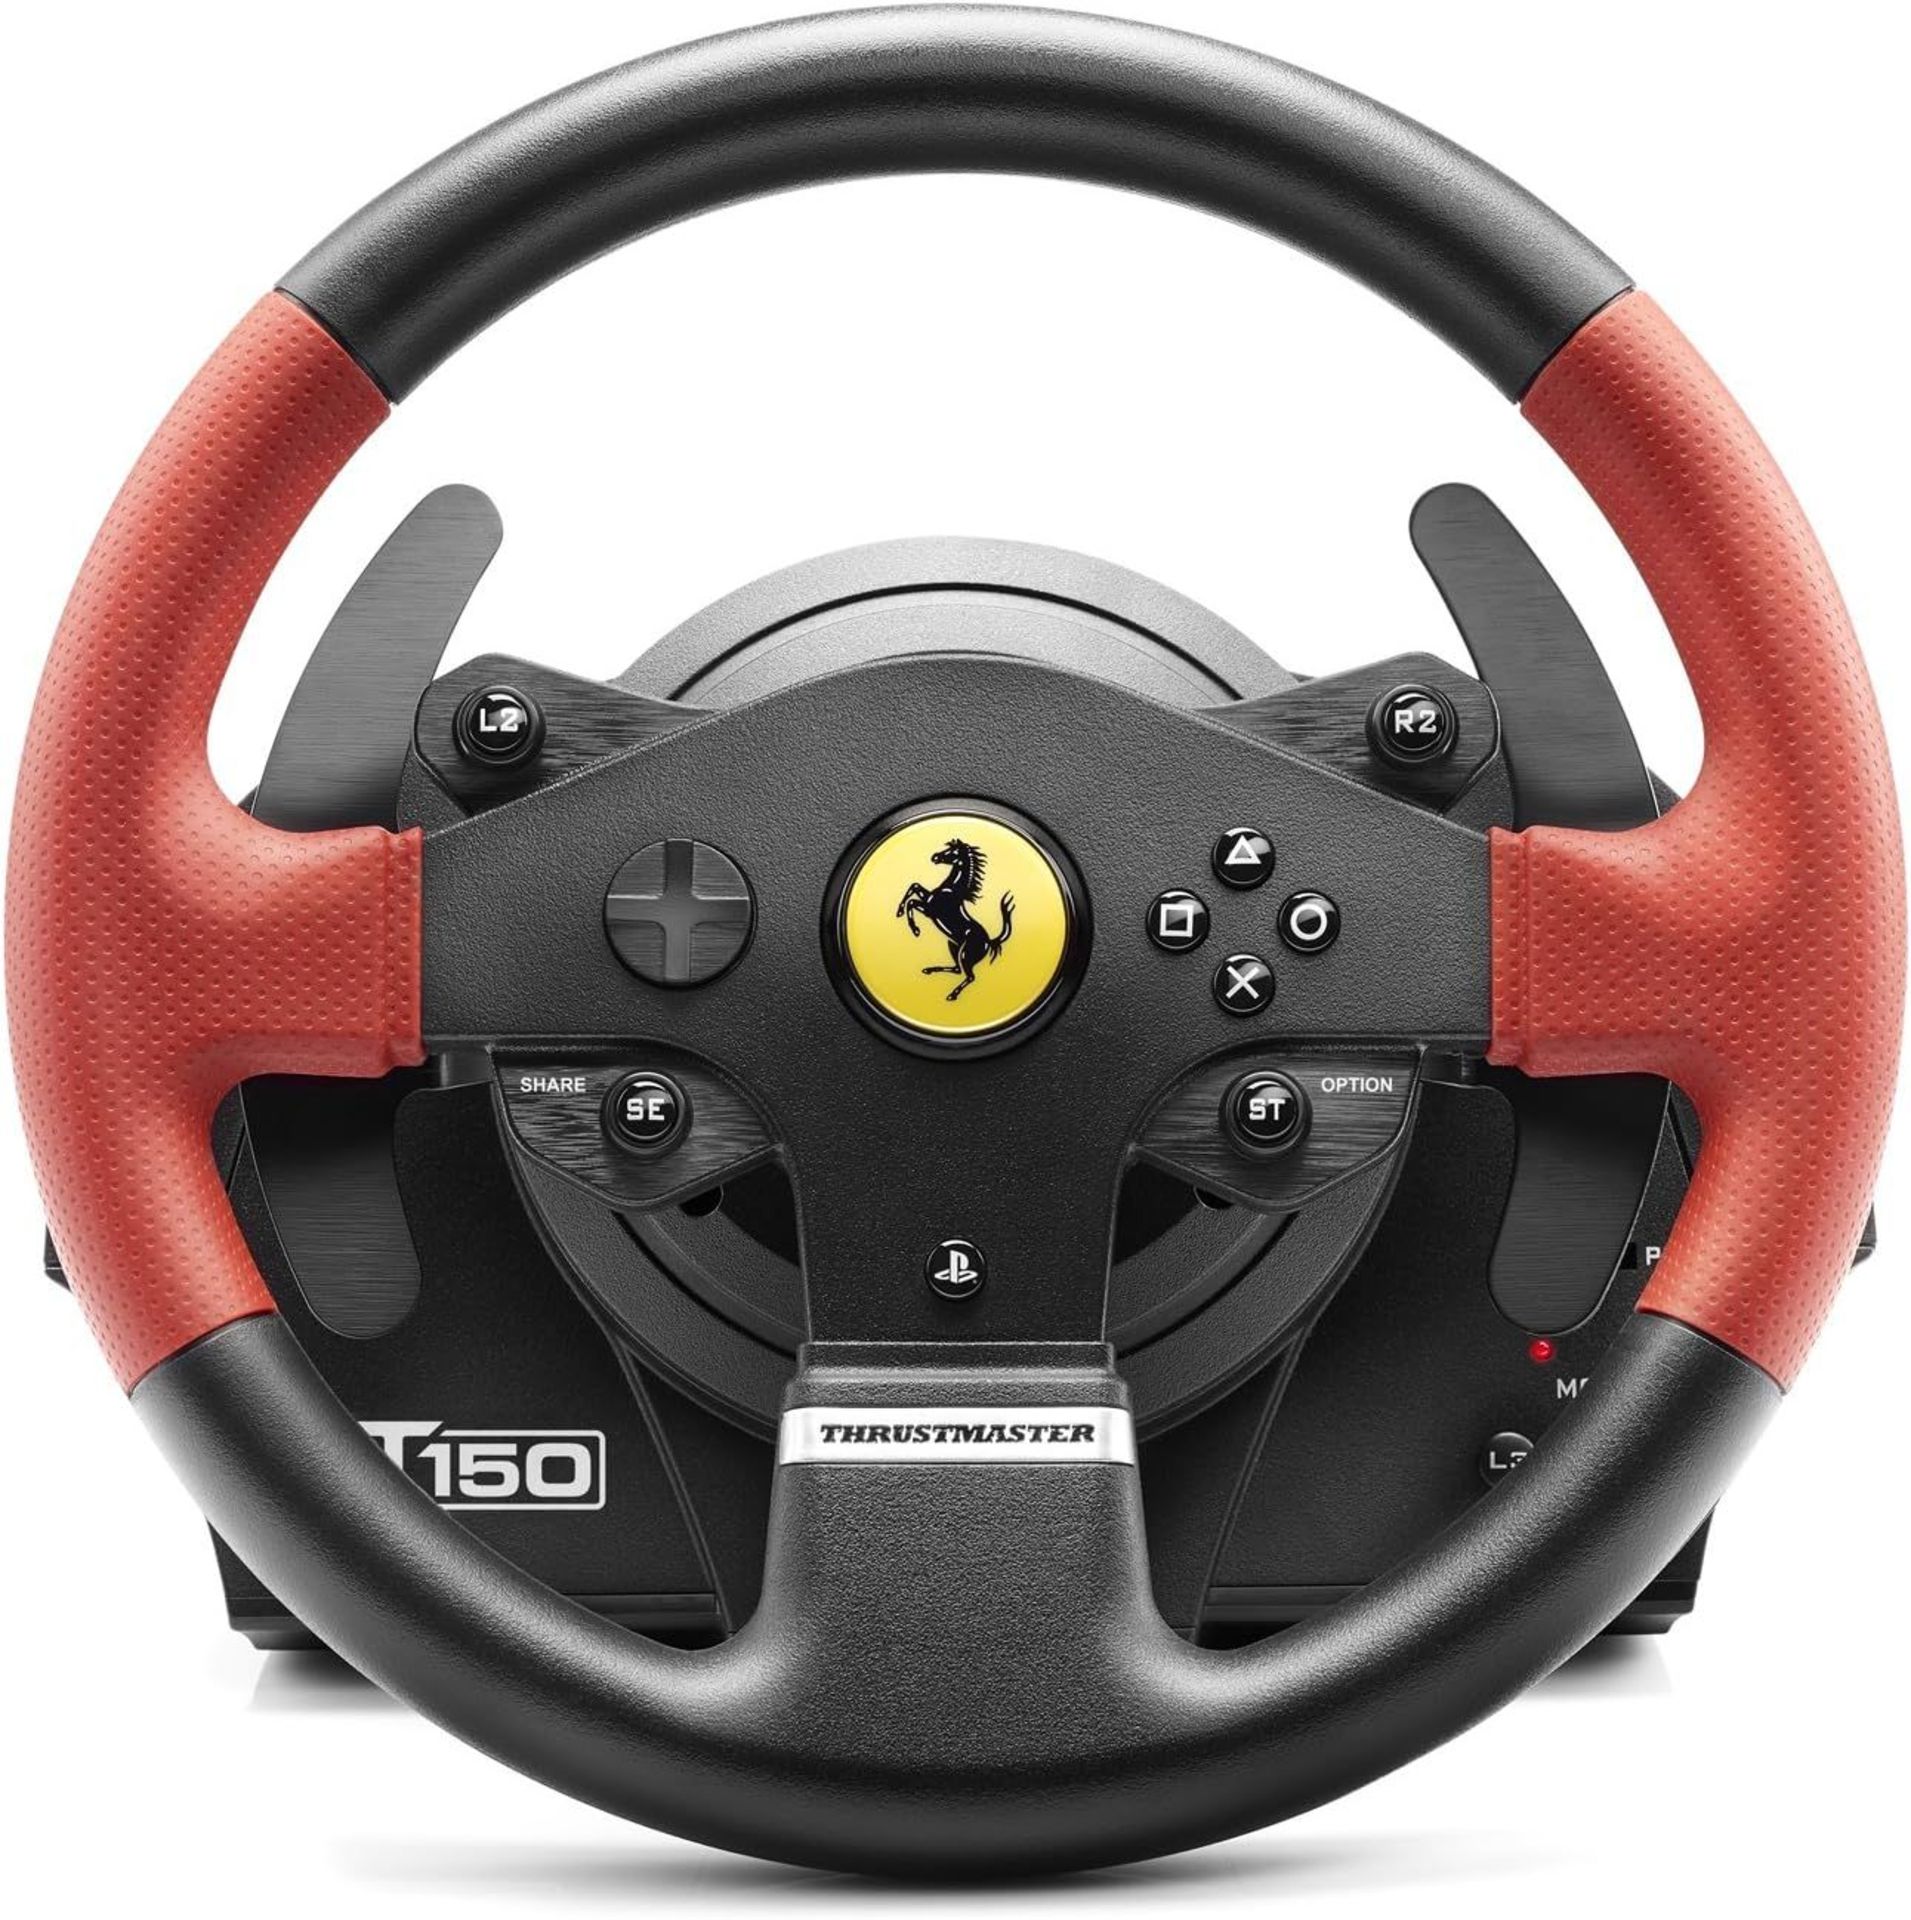 Thrustmaster T150 RS Force Ferrari Racing Wheel. - RRP £409.00. - ER21. 1080 degree Force Feedback - Image 2 of 3